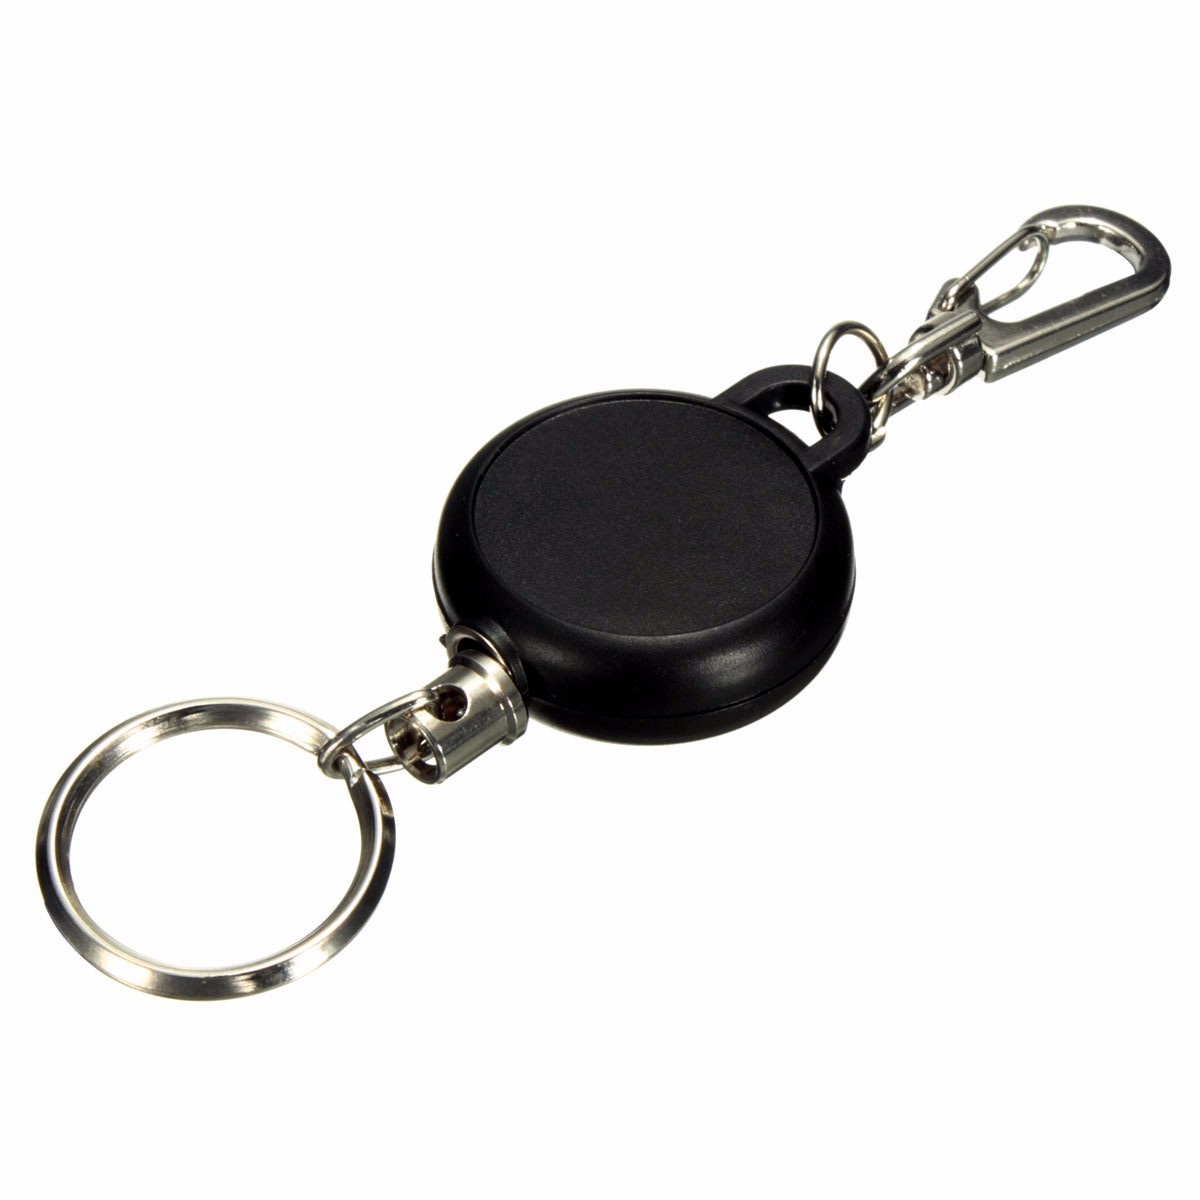 Kicute Топла Продажба Црна Keychain Должина 60см Значка Ролна Стигнале Одвратна Помине ID Картичката за да го Повлечете